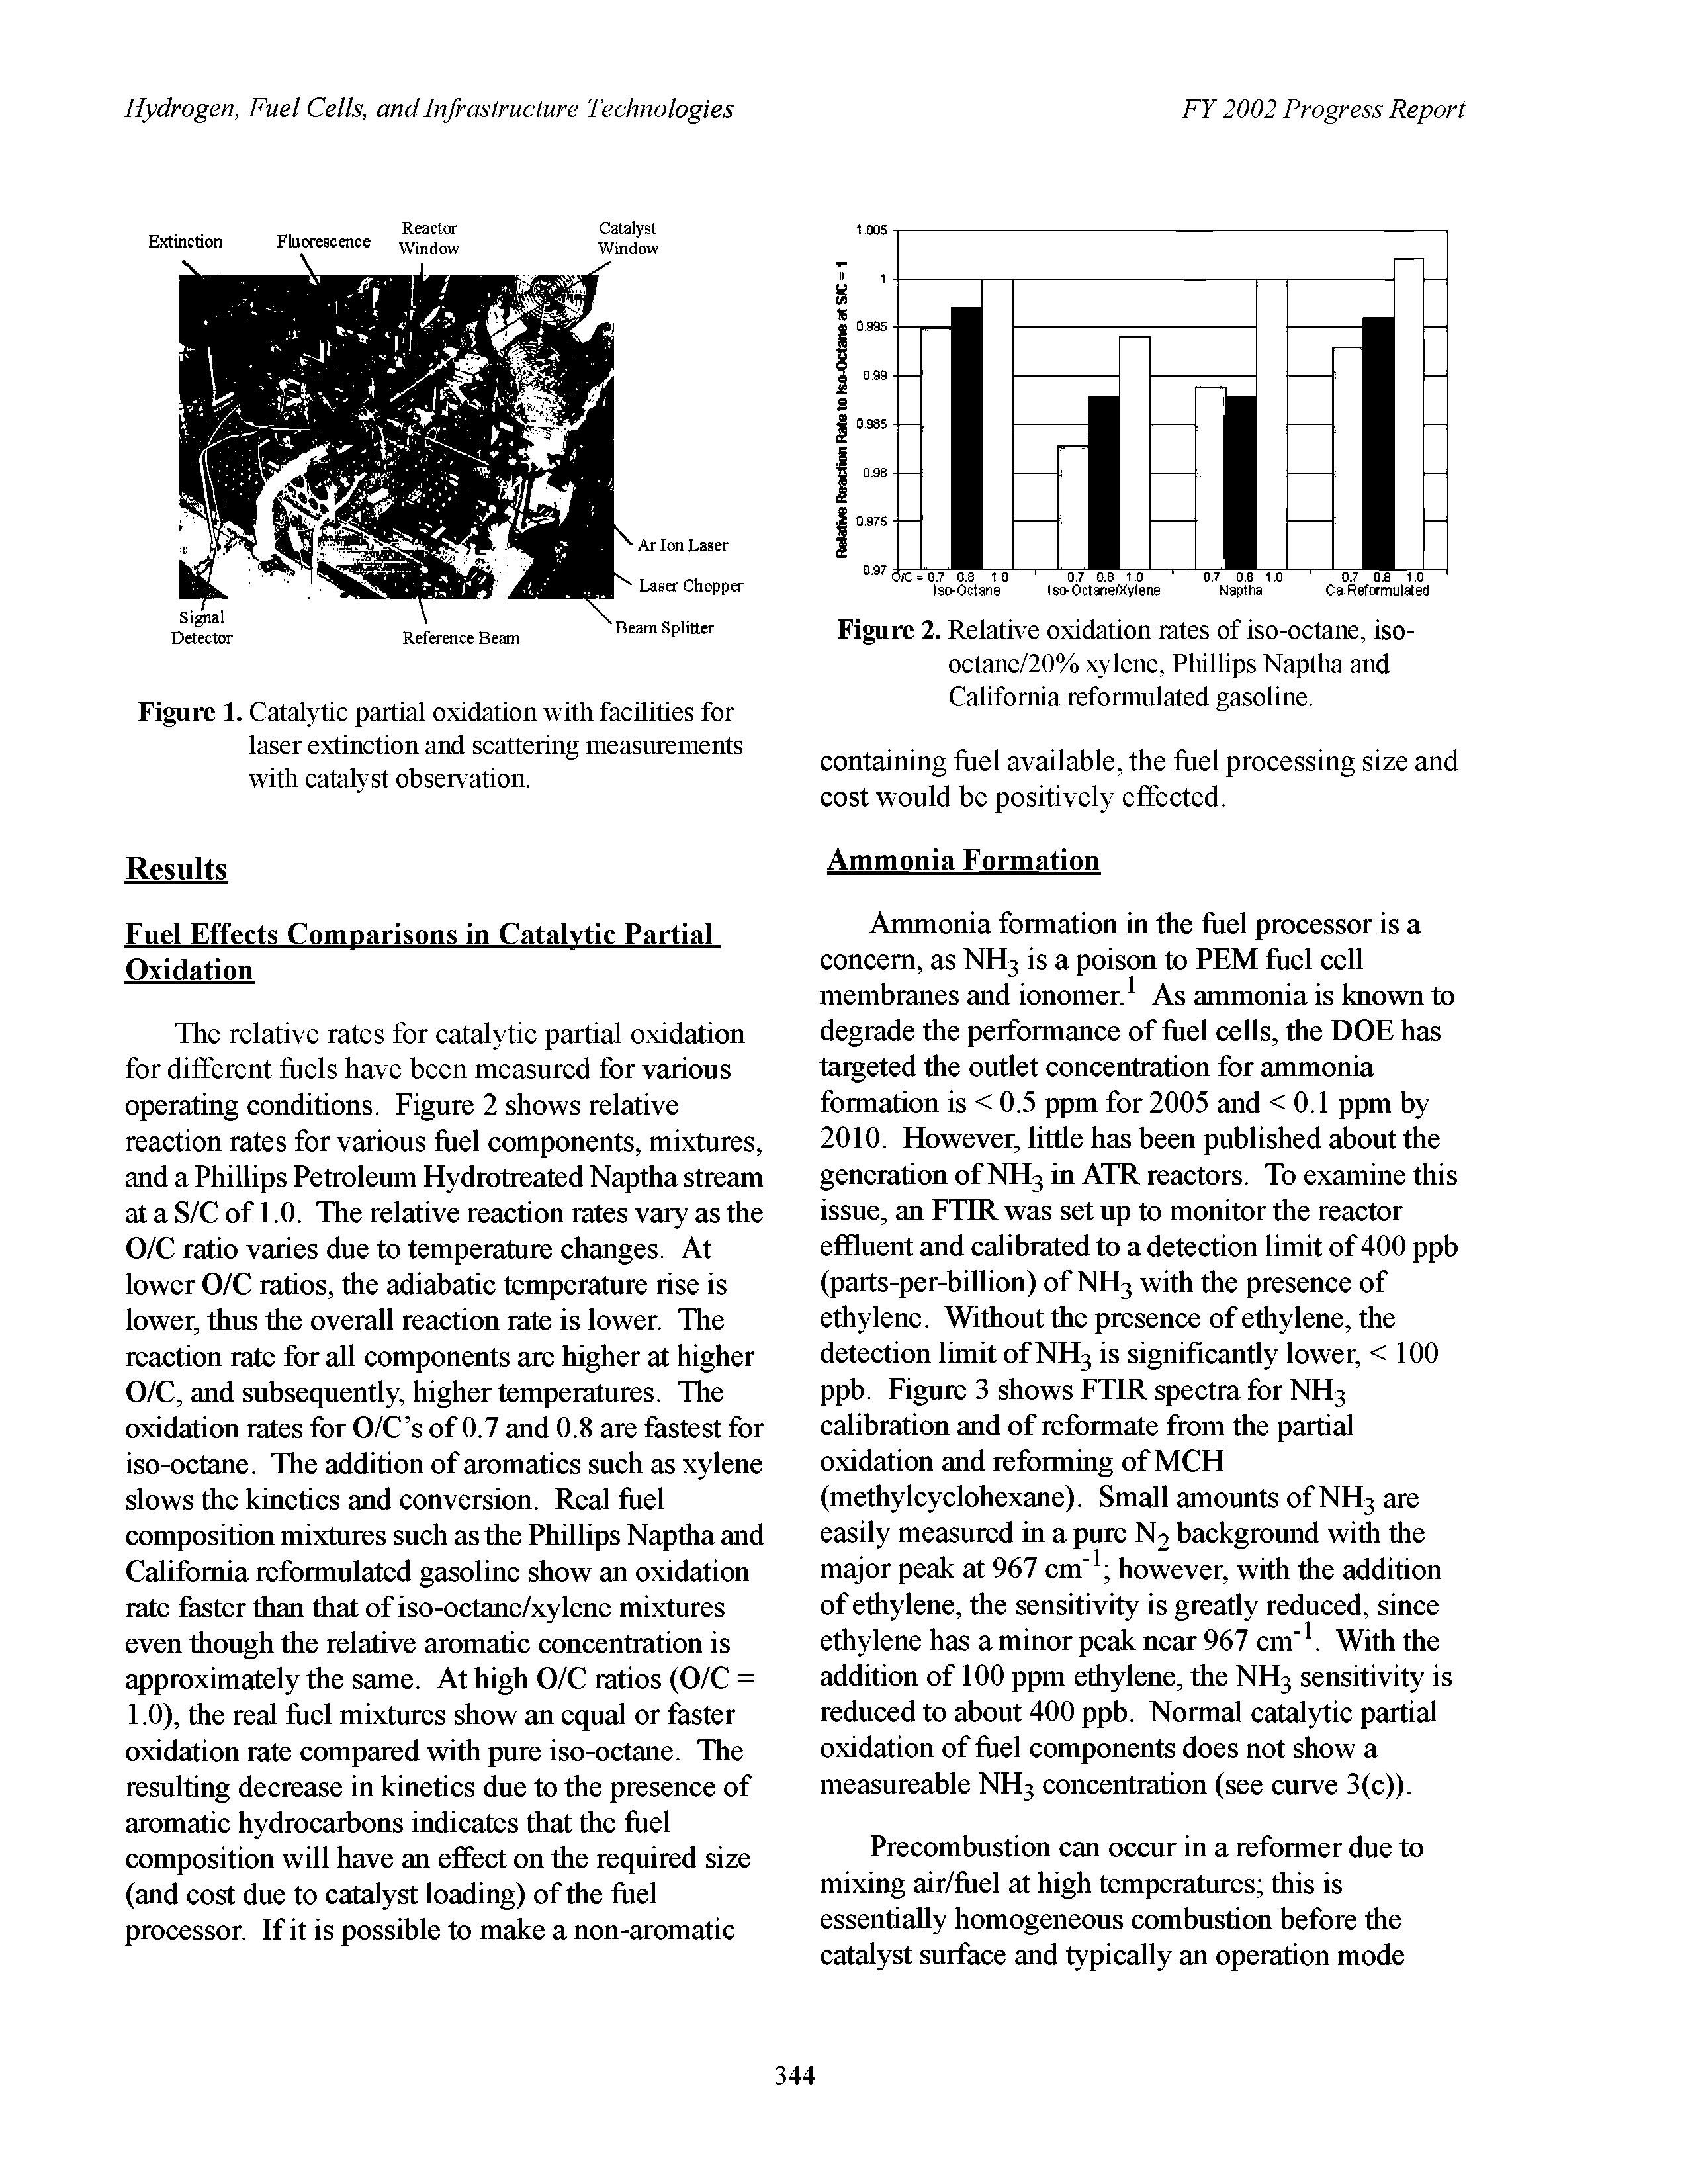 Figure 2. Relative oxidation rates of iso-octane, iso-octane/20% xylene, Phillips Naptha and California reformulated gasoline.